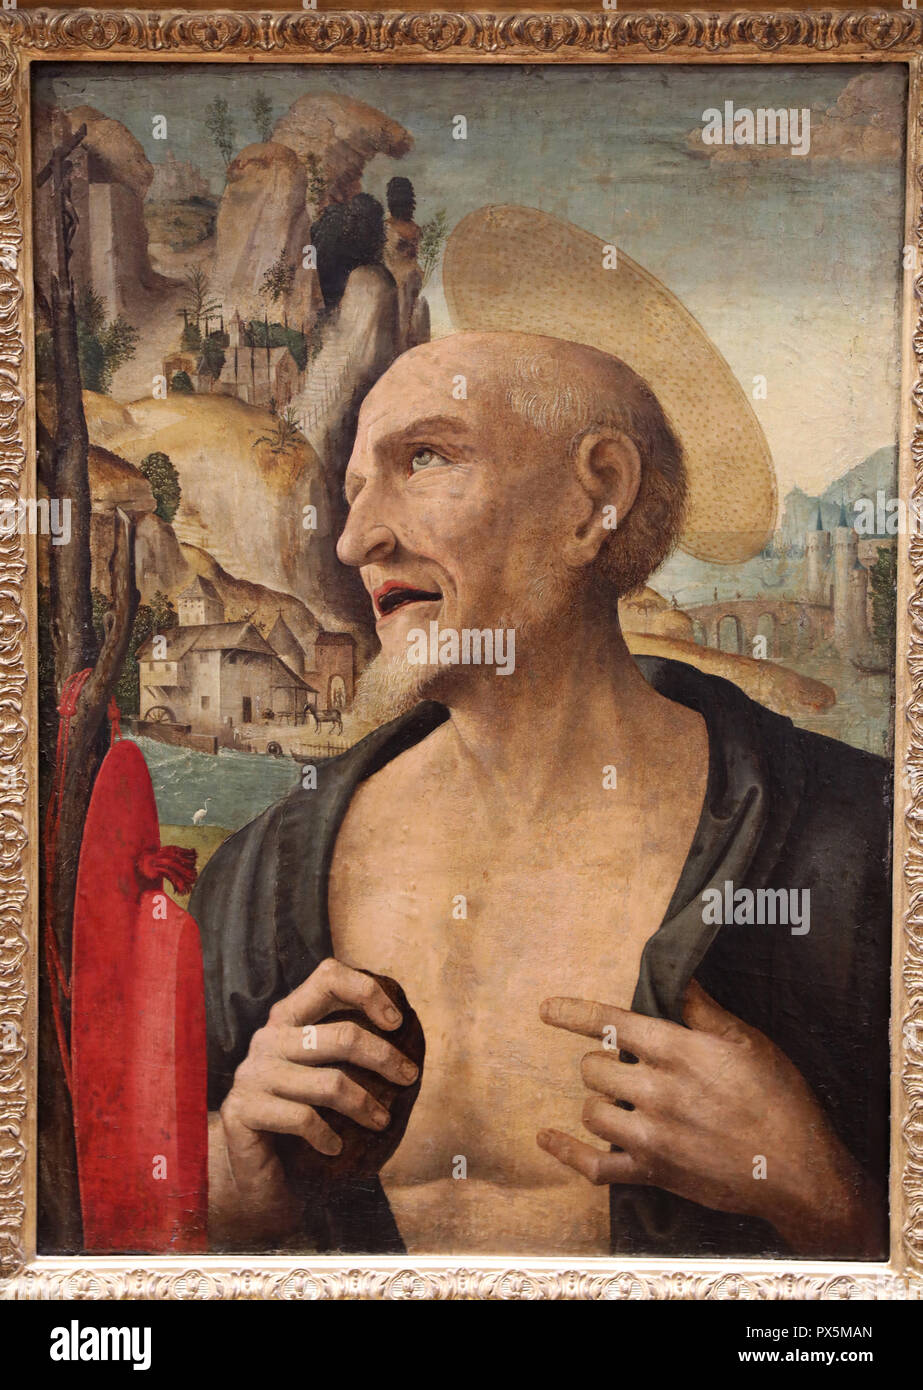 Fine Art museum, Lyon, France. Attributed to Giovanni Francesco Maineri, Saint Jerome. 15th century. Stock Photo